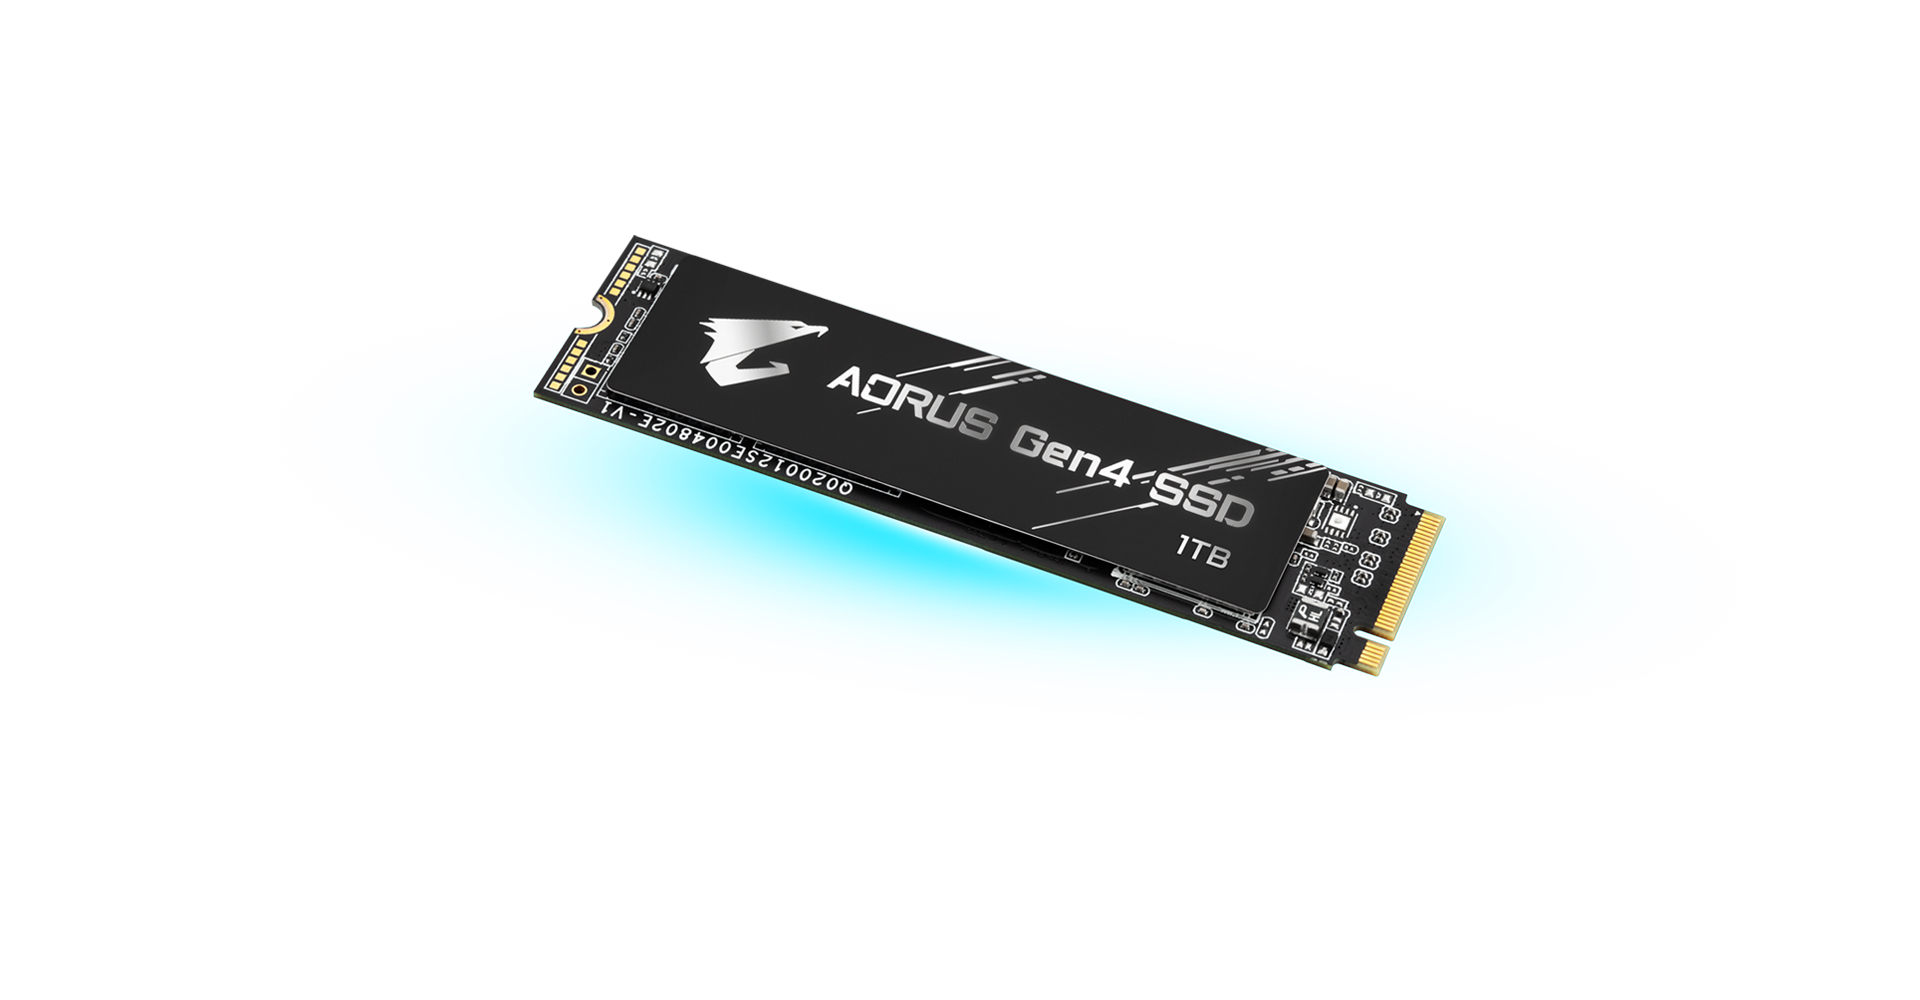 AORUS Gen4 SSD 1TB Key Features